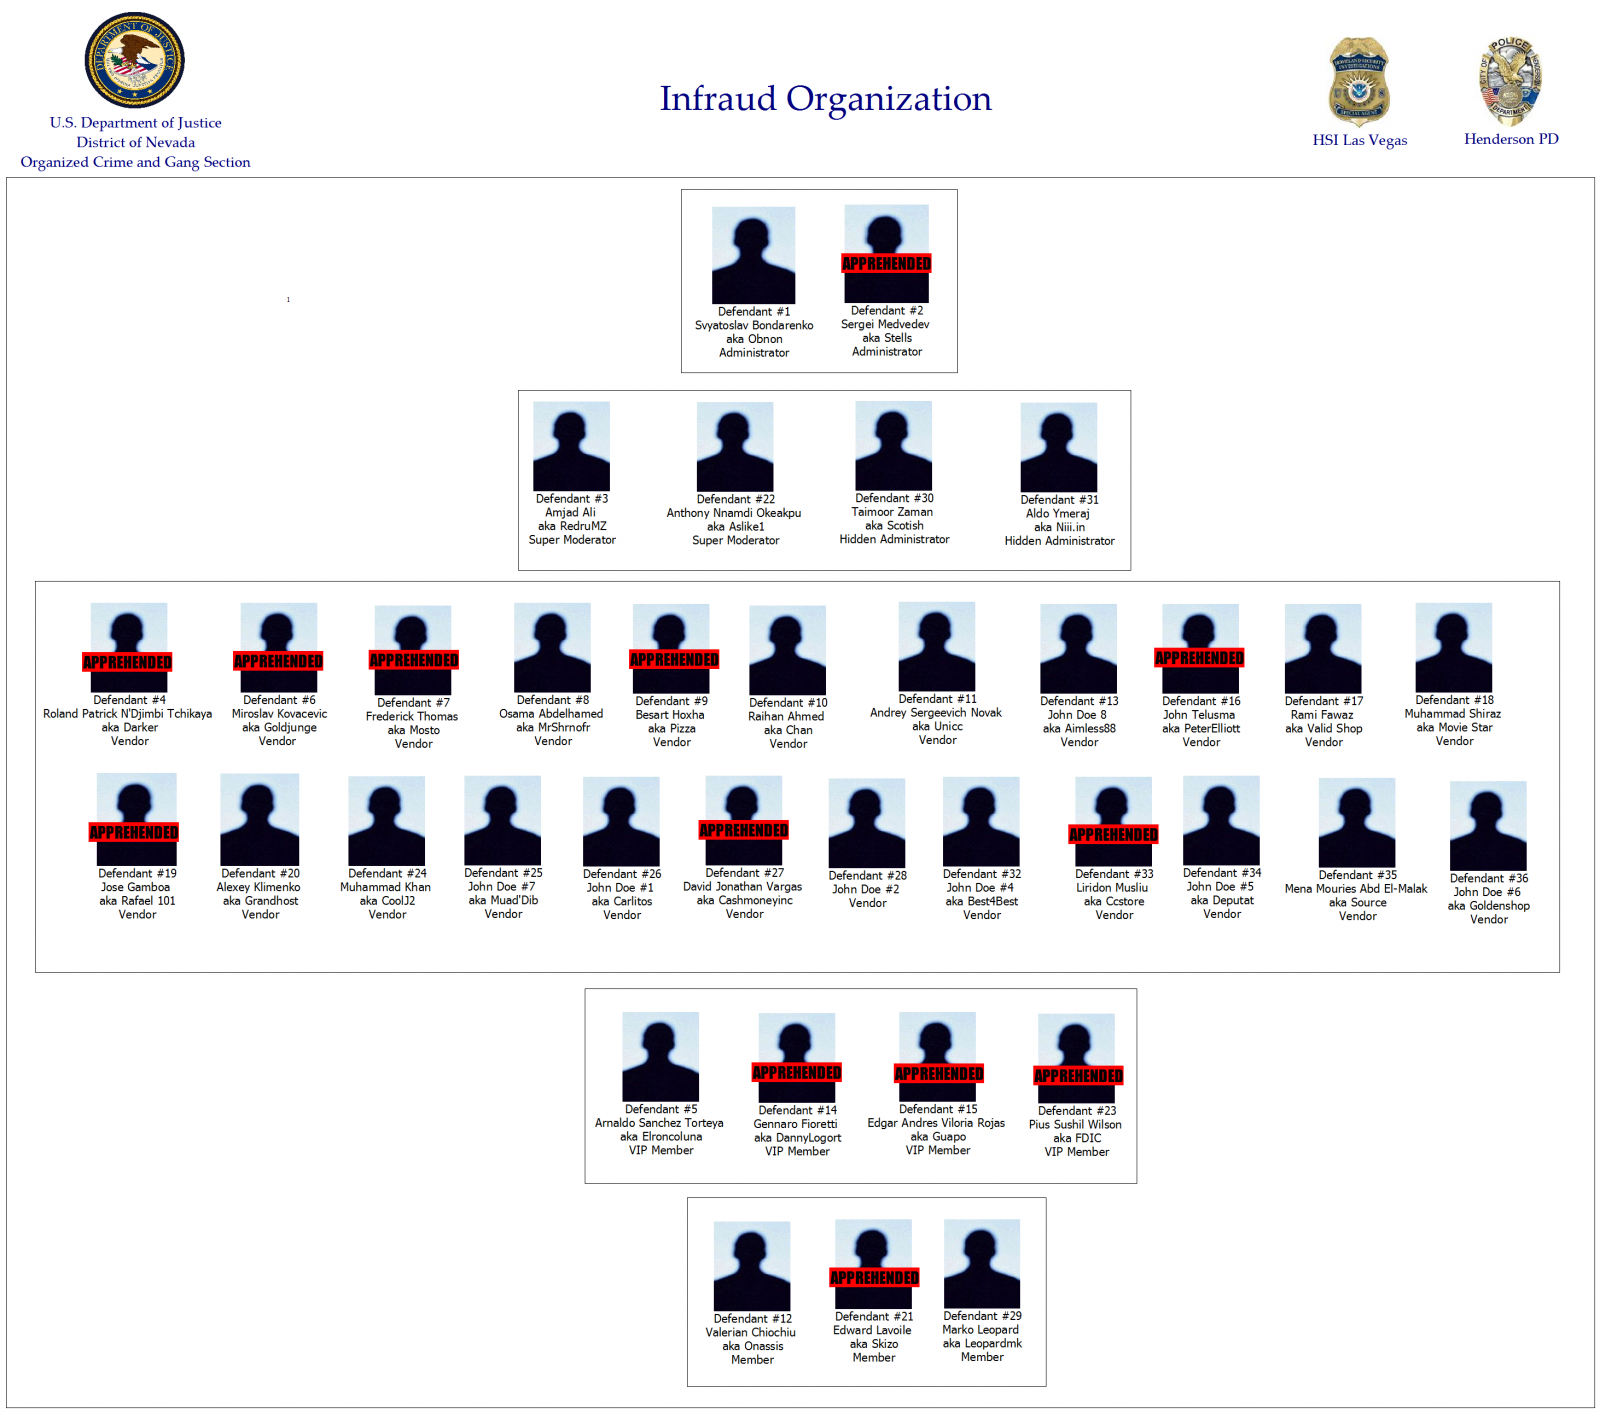 Infraud Organnization hierarchy